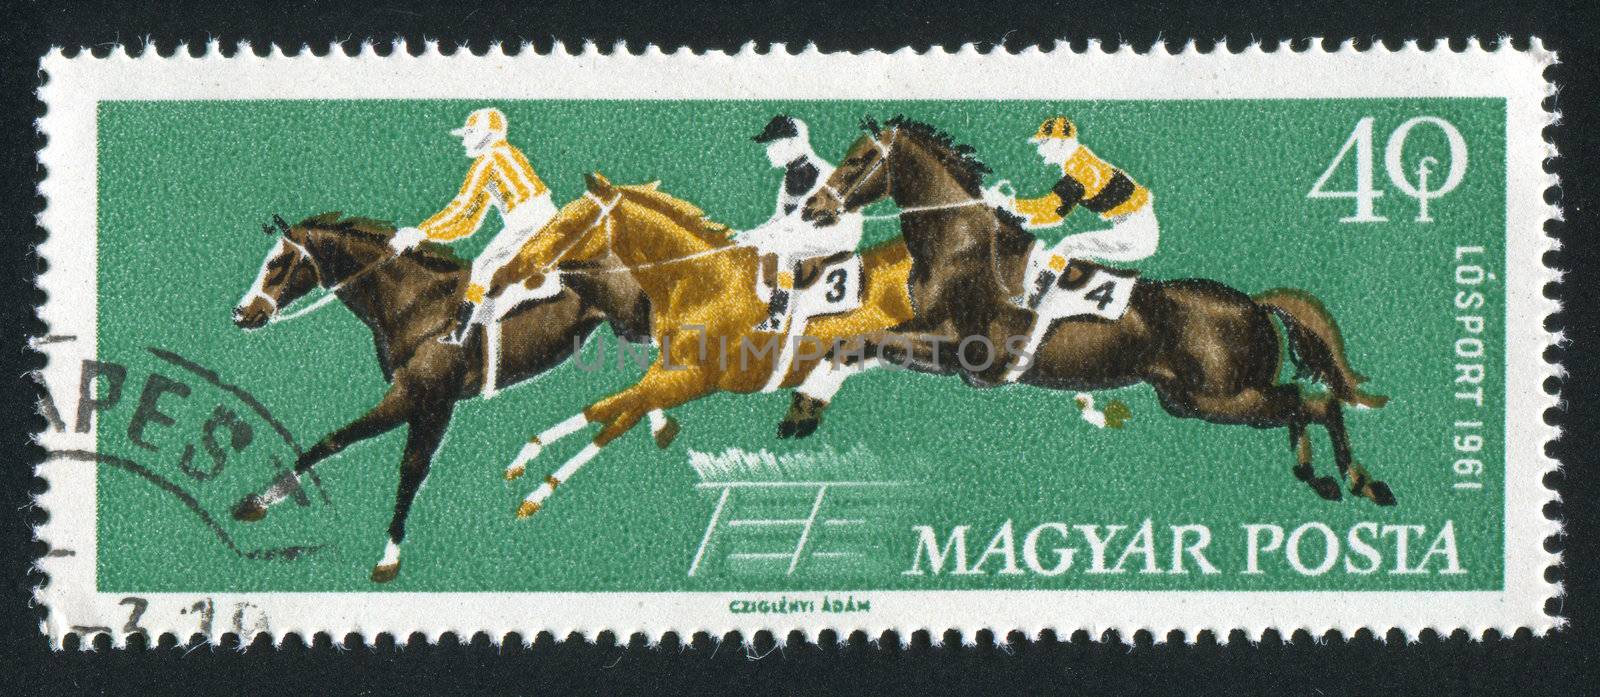 HUNGARY - CIRCA 1961: stamp printed by Hungary, shows concours hippique, circa 1961